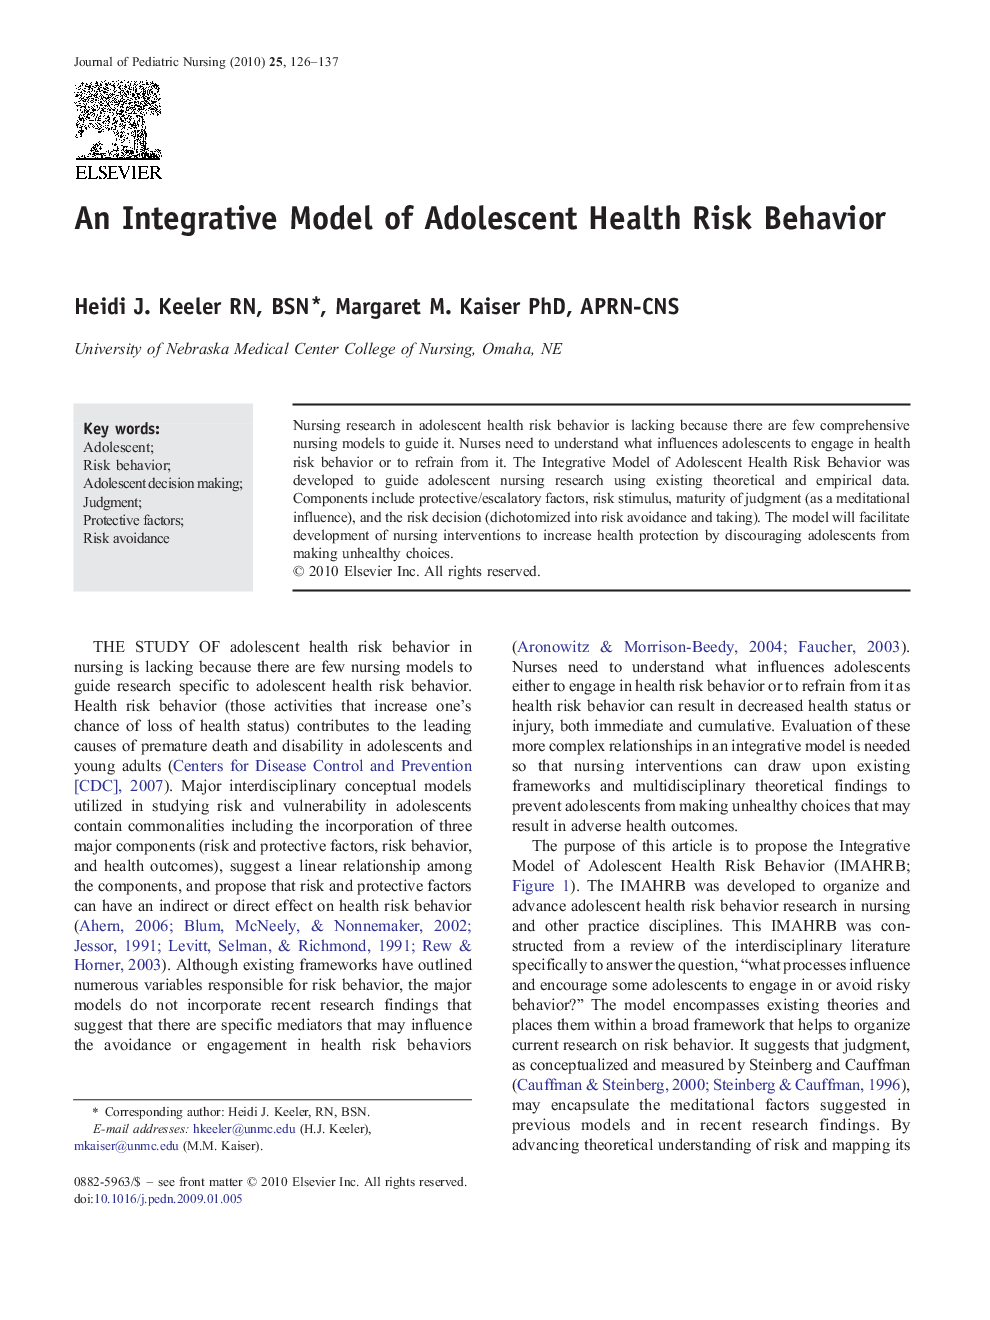 An Integrative Model of Adolescent Health Risk Behavior